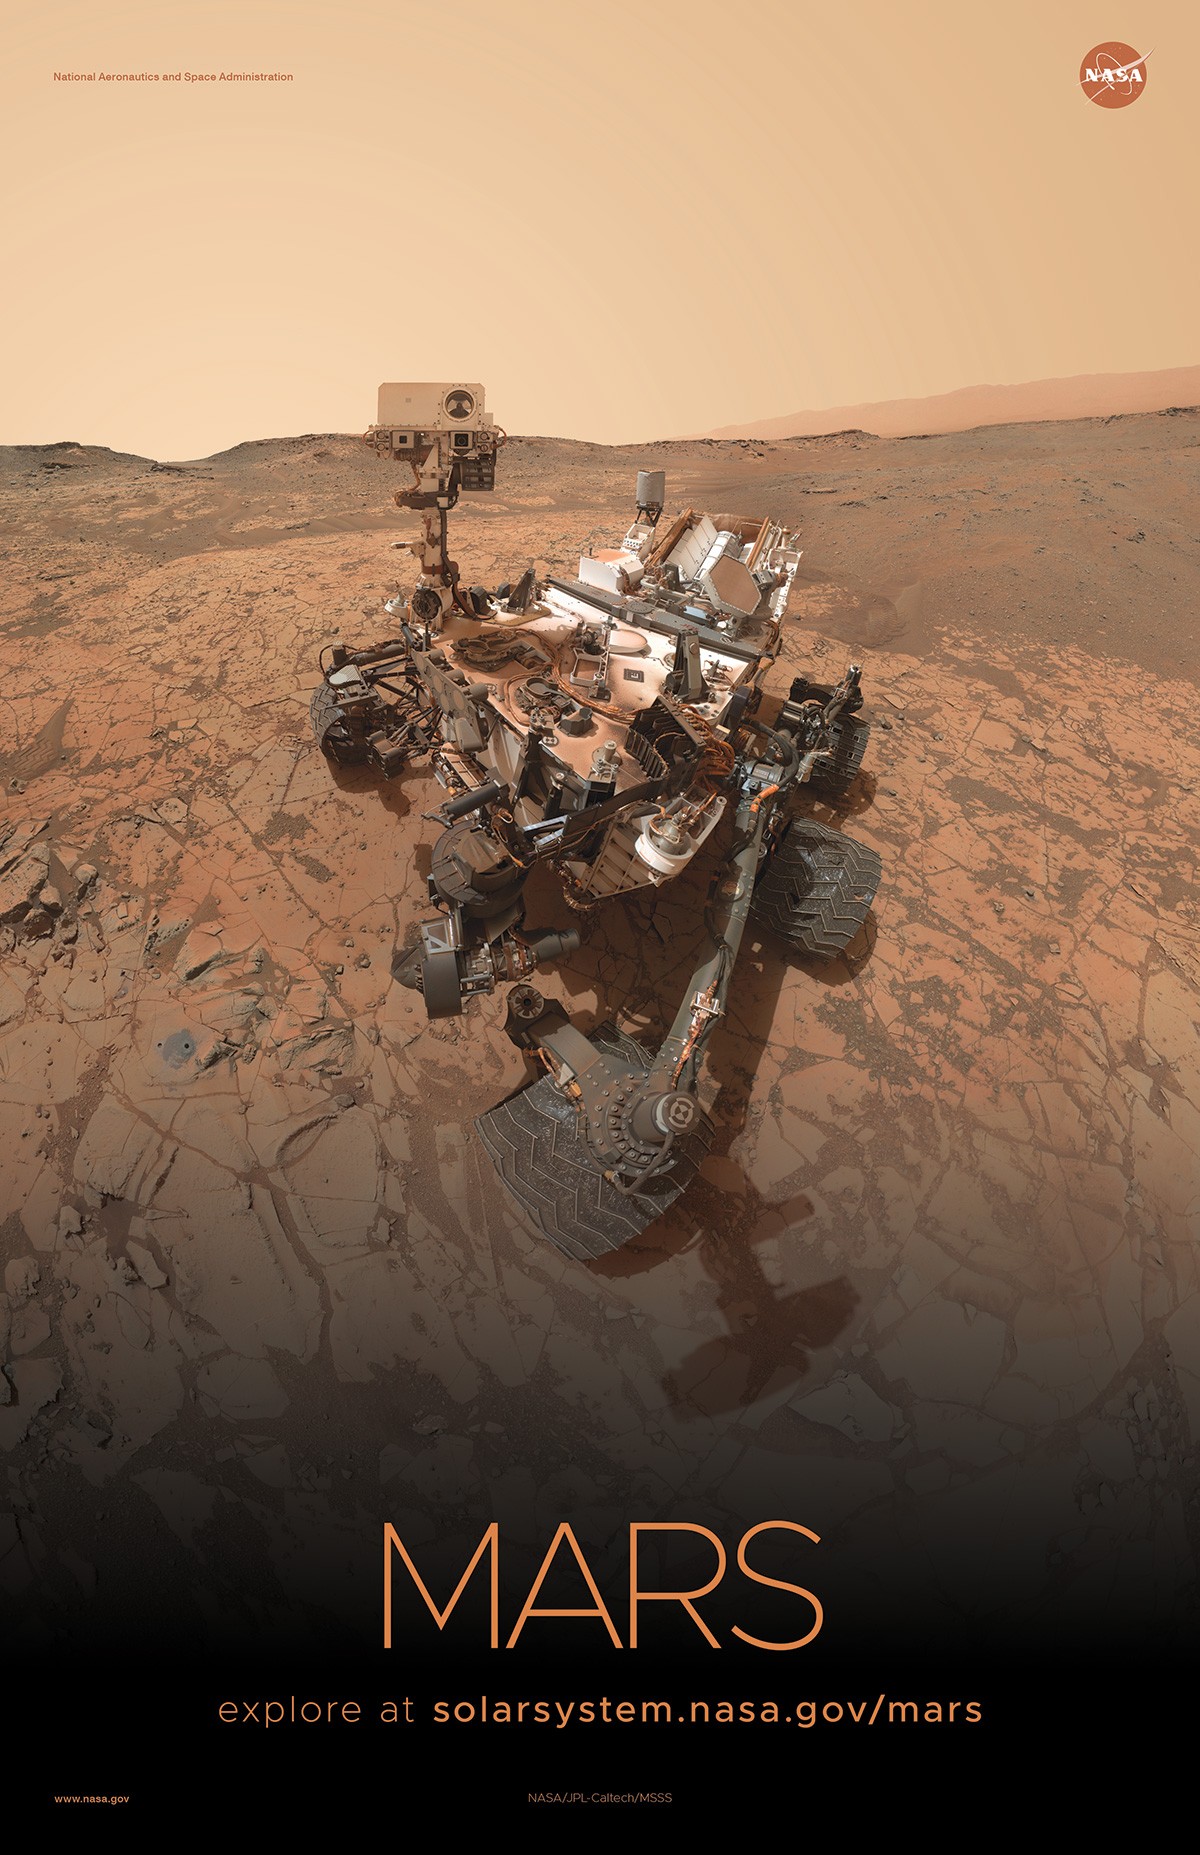 Self portrait of Curiosity rover on Mars.